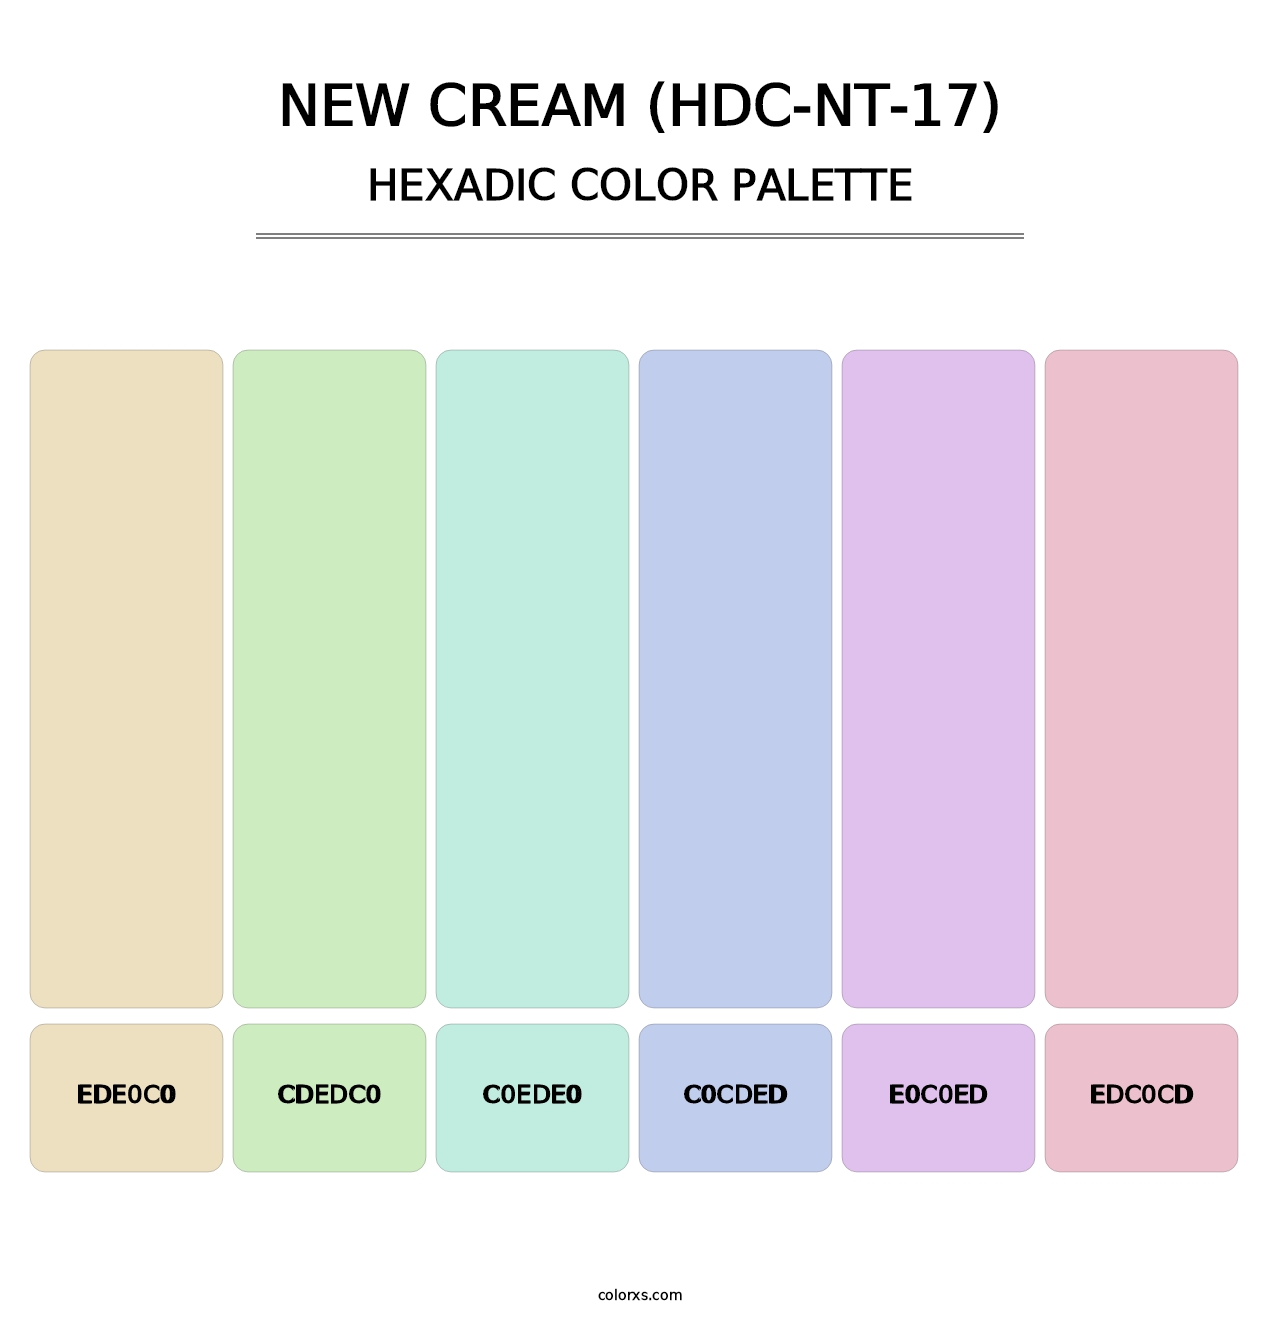 New Cream (HDC-NT-17) - Hexadic Color Palette